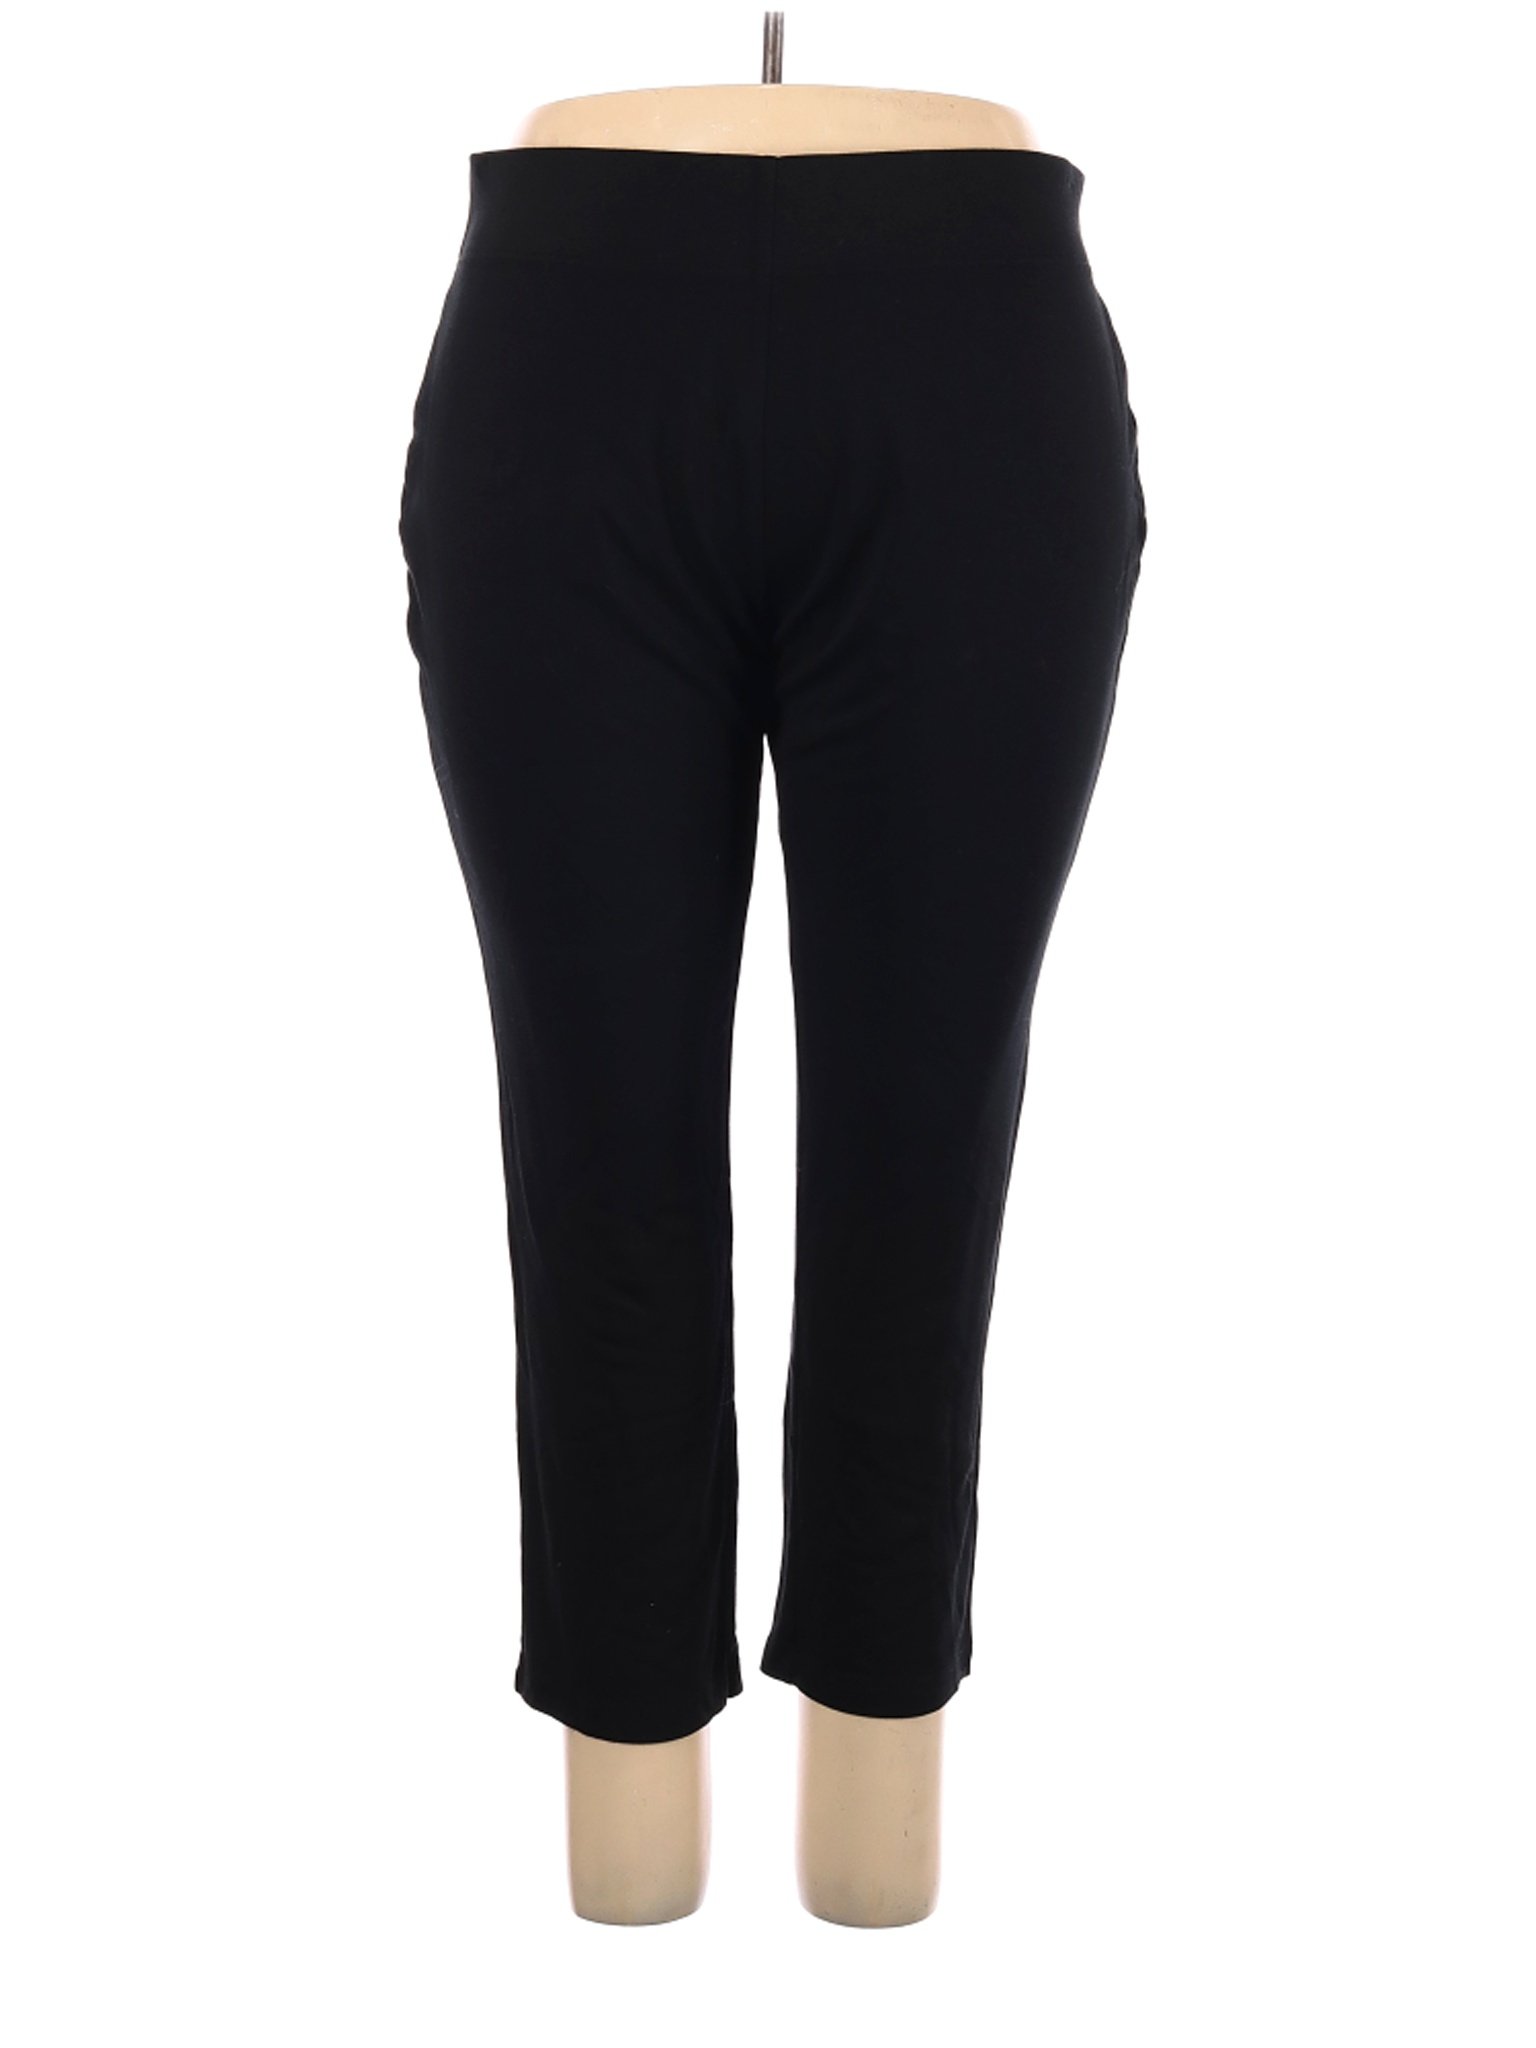 Falls Creek Women Black Casual Pants 2X Plus | eBay